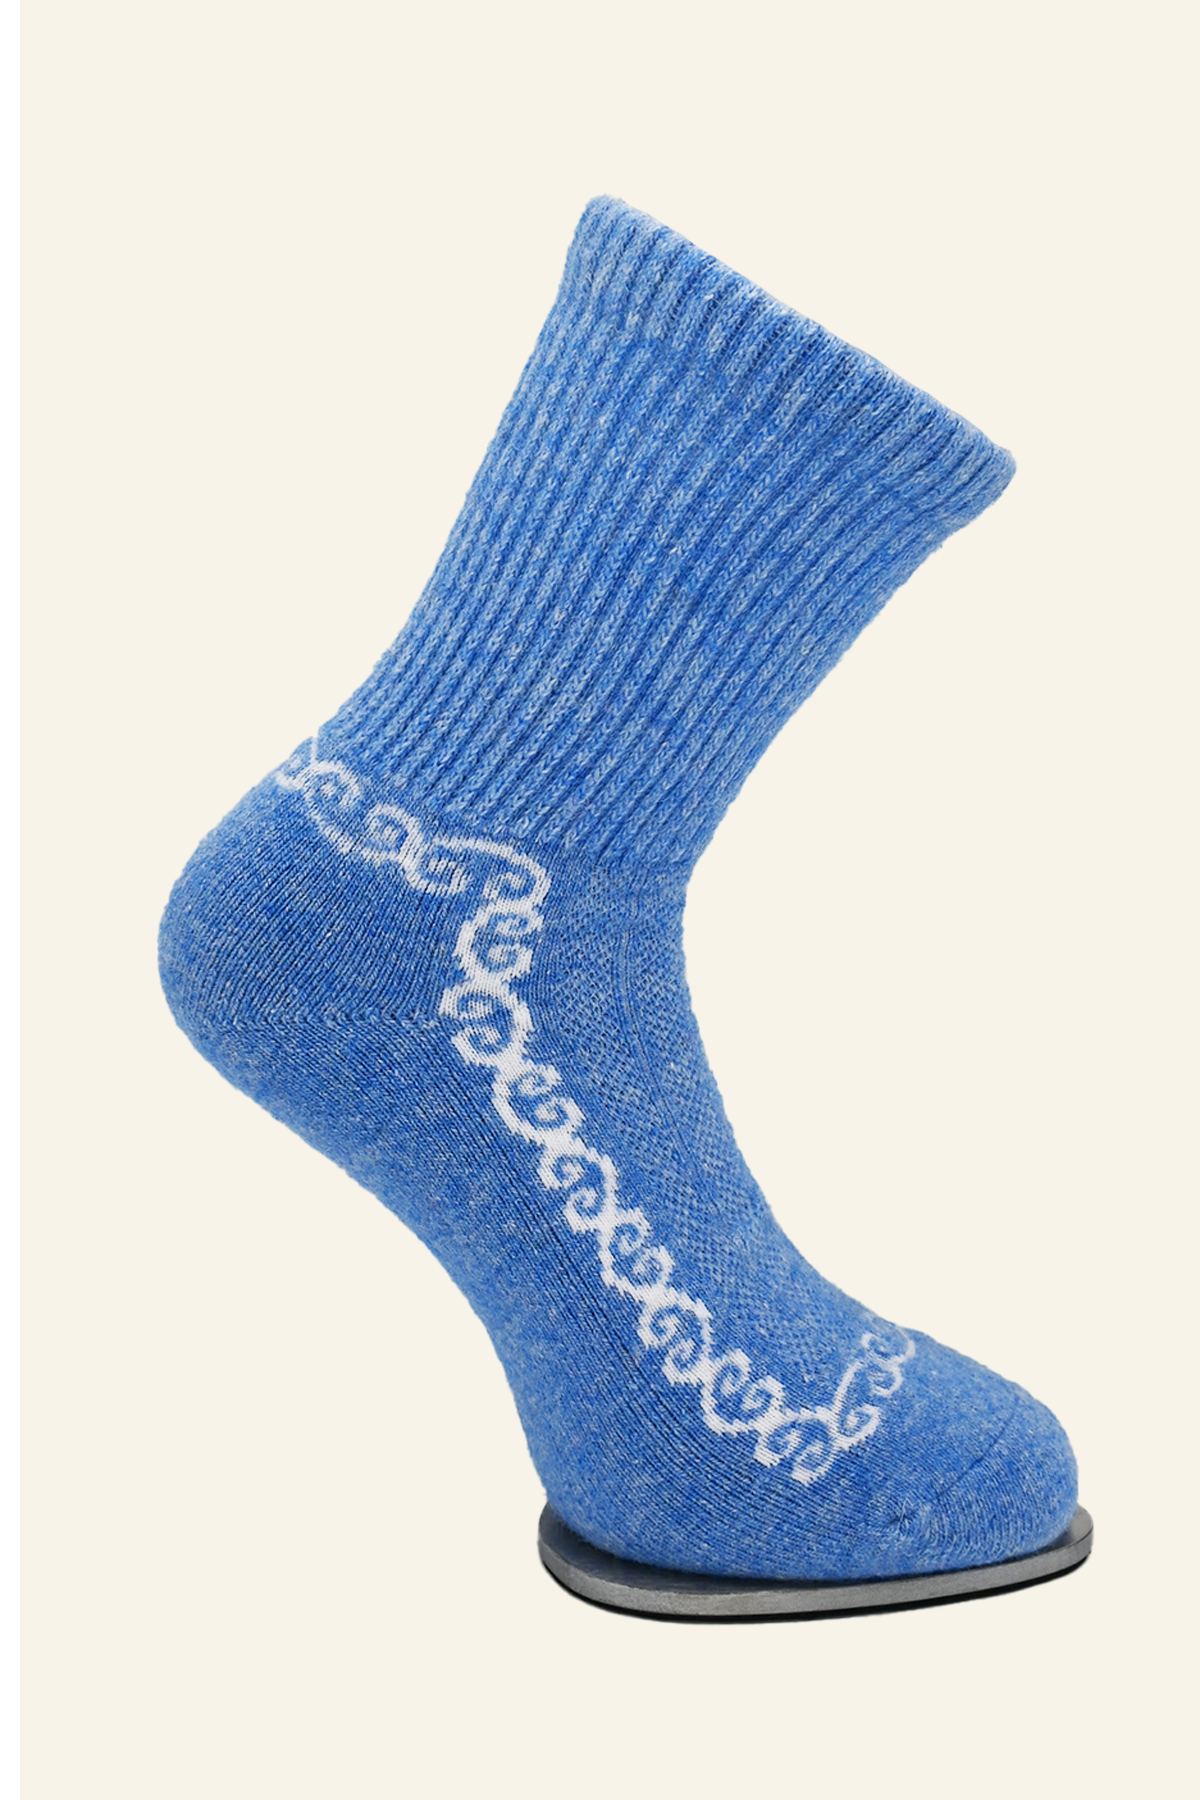 Blue Sheep Wool Socks